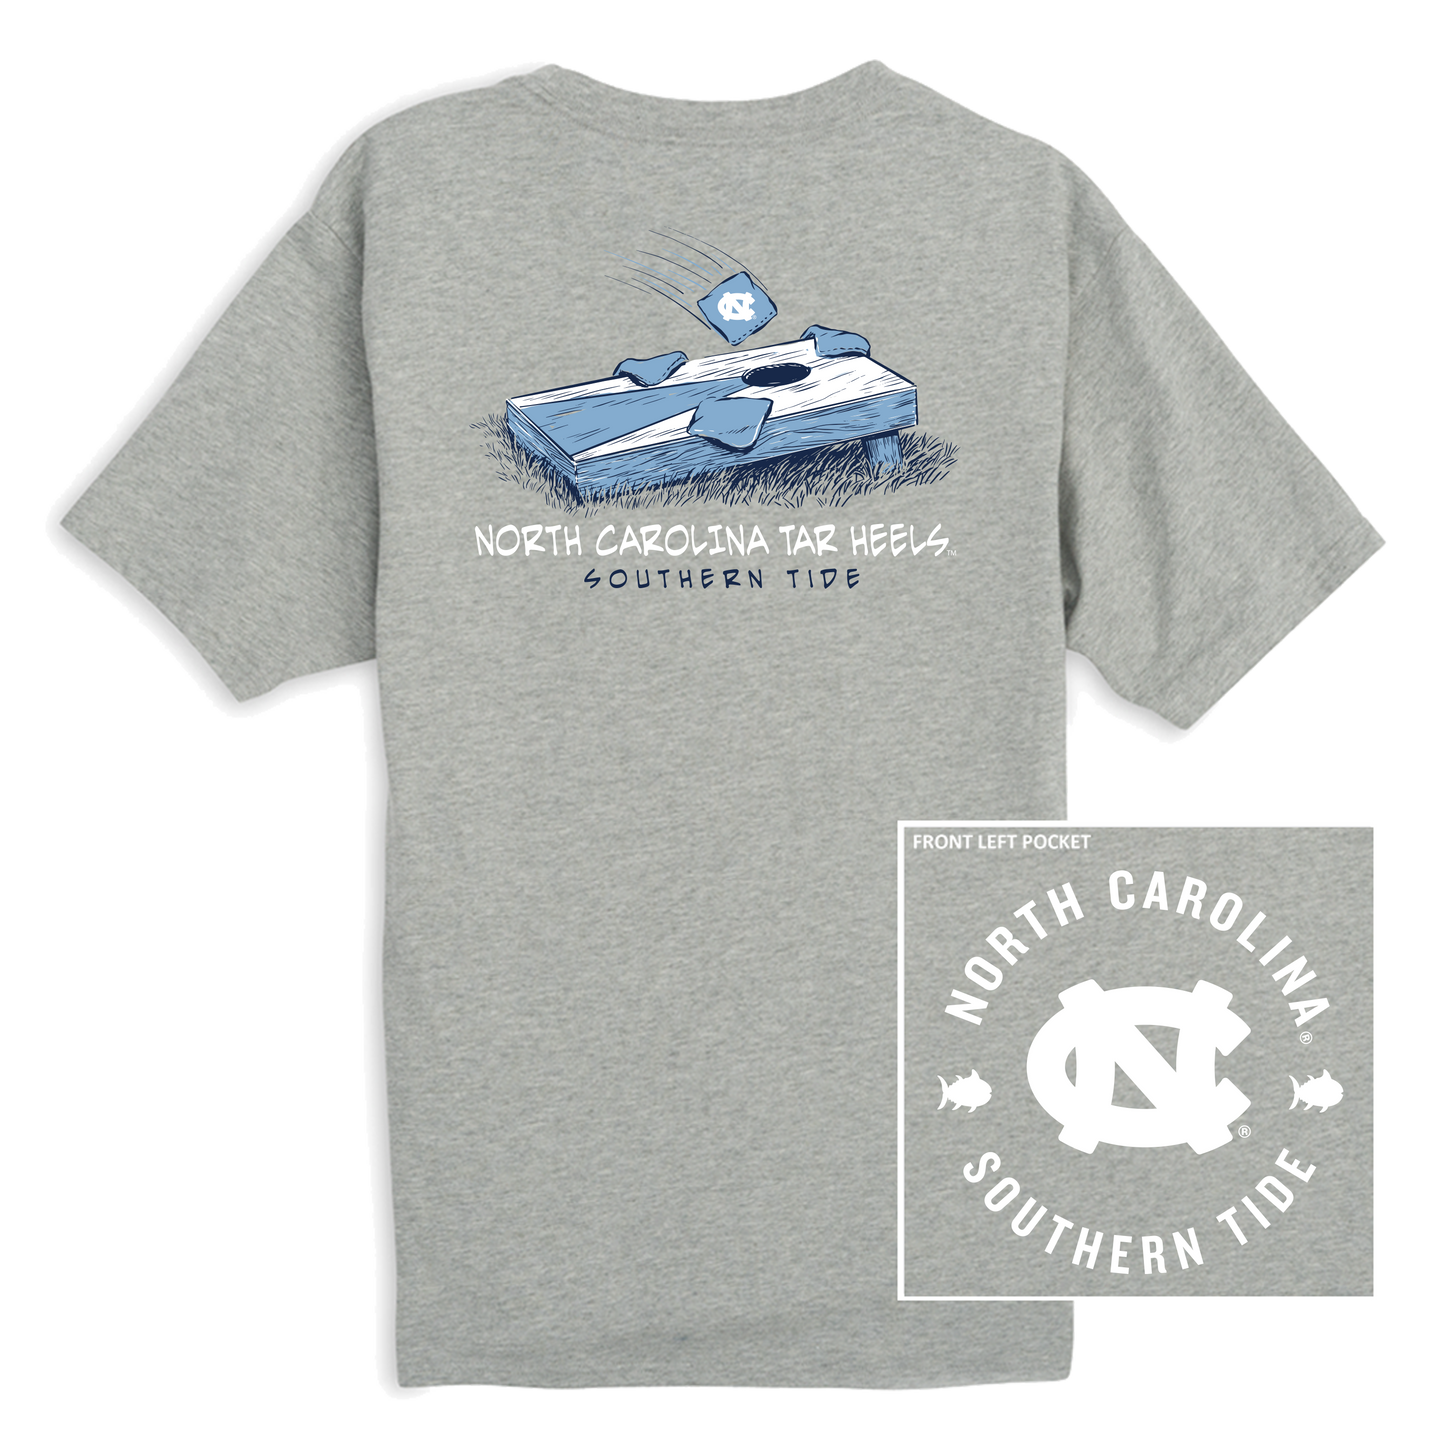 North Carolina Tar Heels Cornhole T-Shirt by Southern Tide